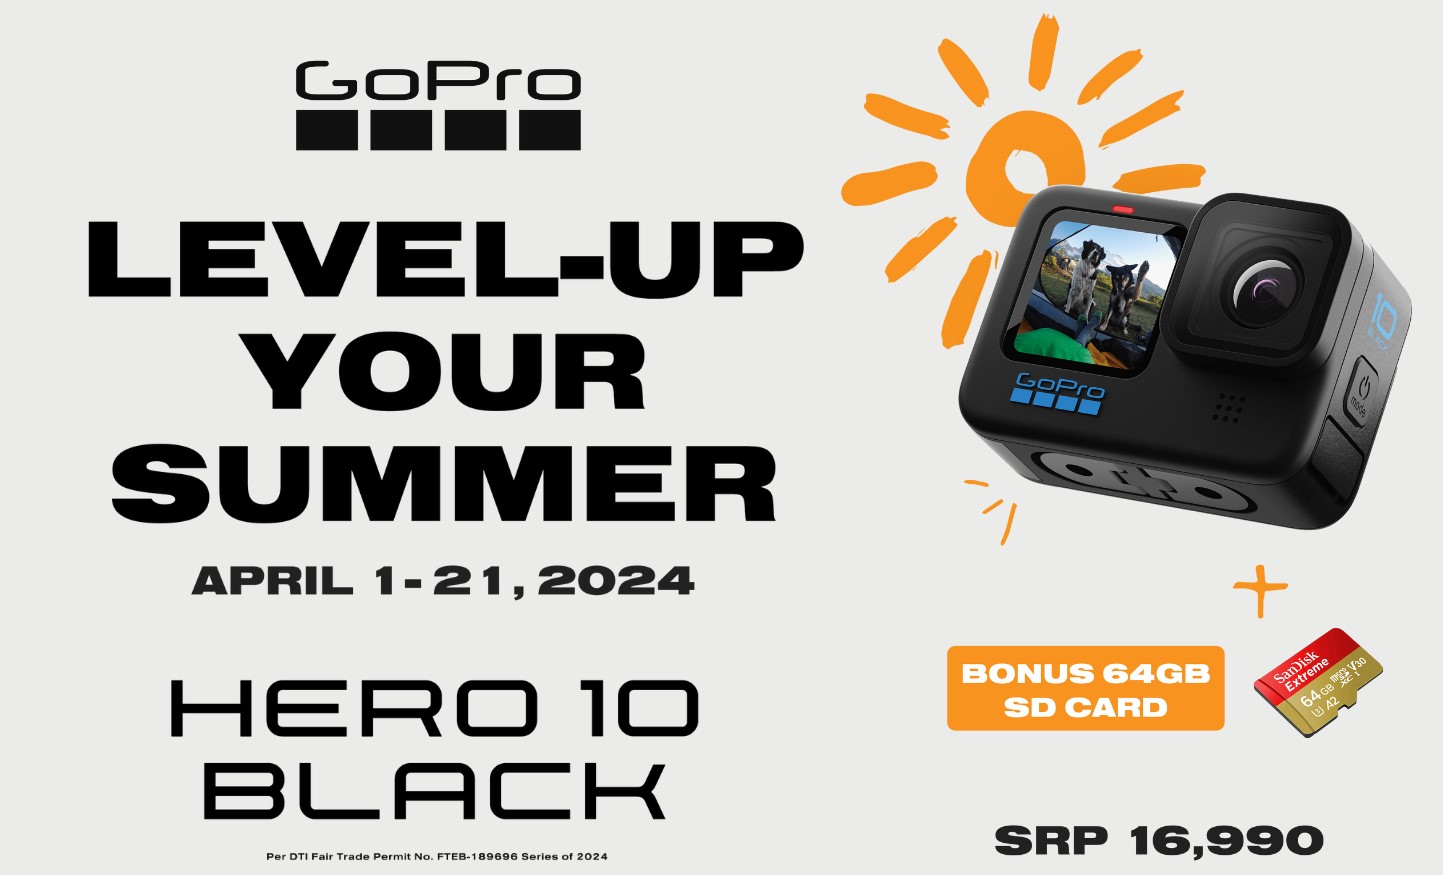 Gopro Level up your Summer Promo